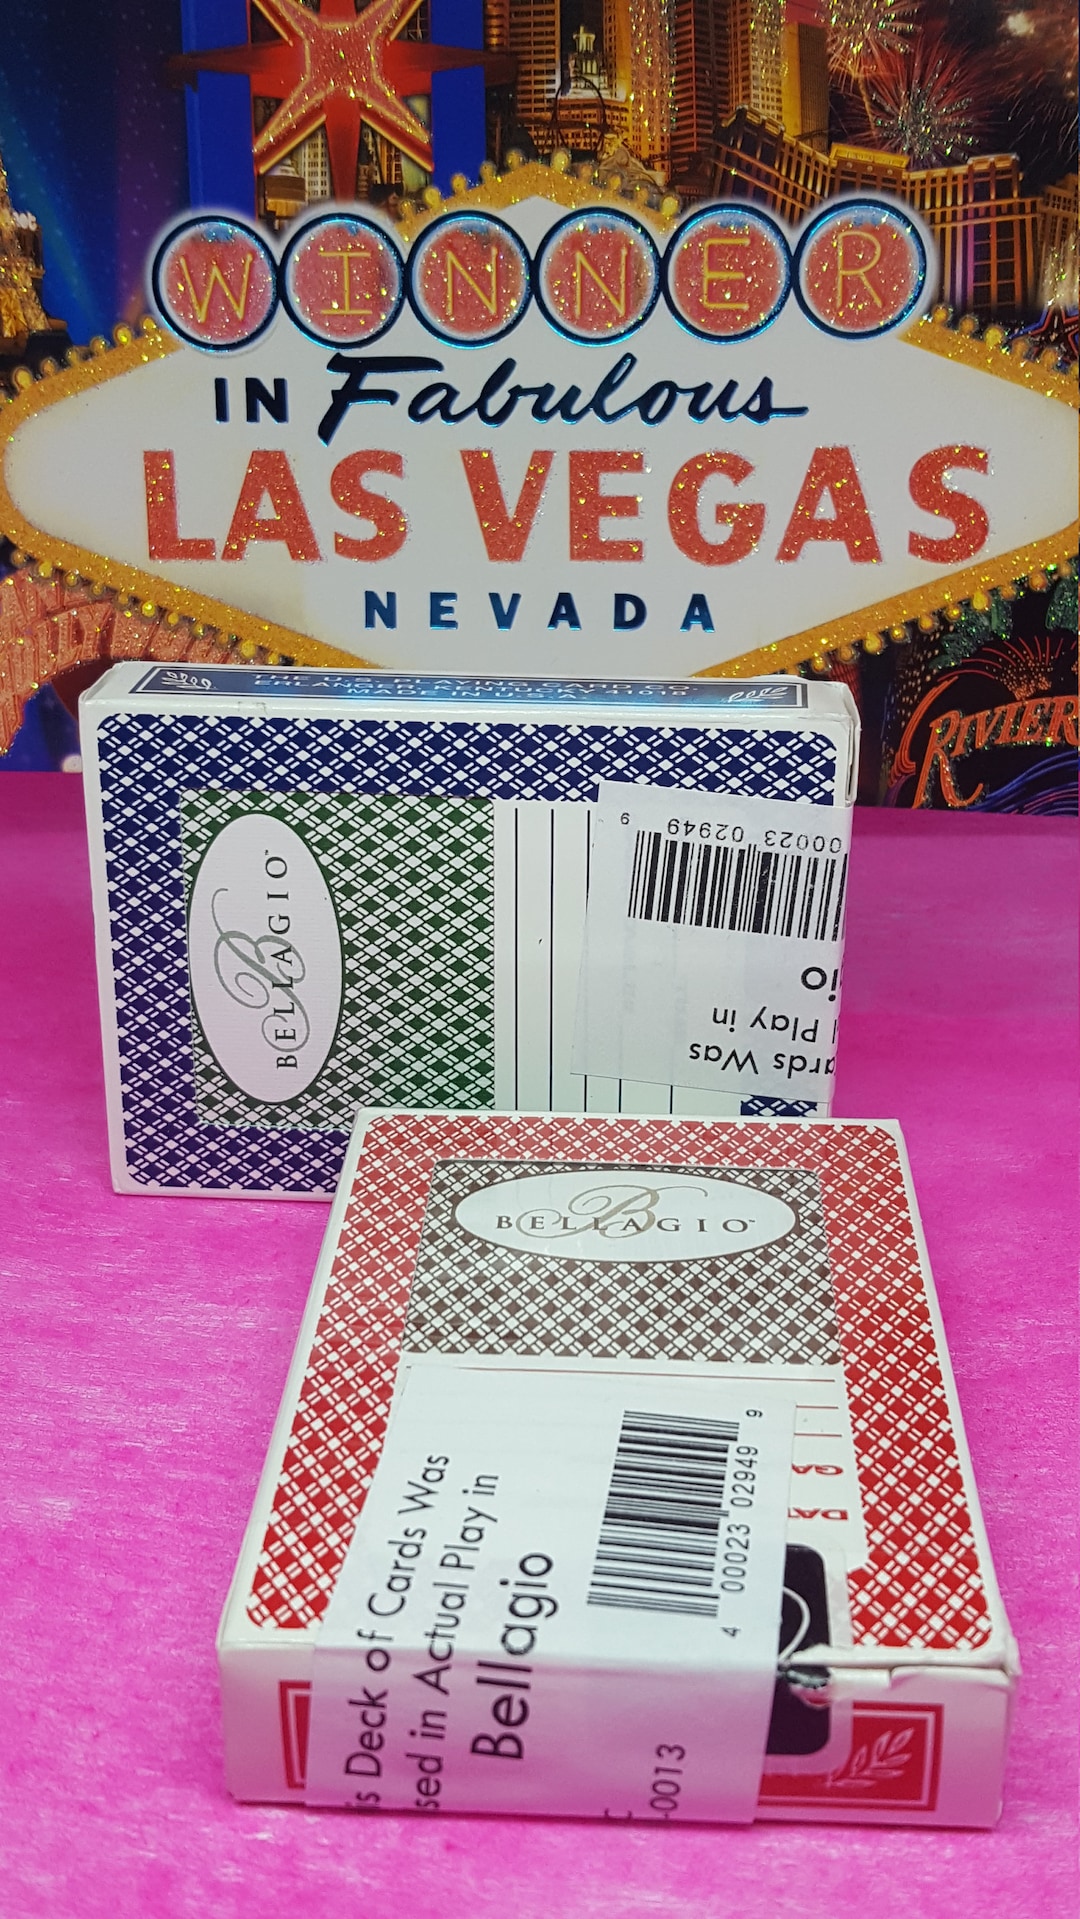 Rare Vintage Bellagio Las Vegas Cards Sealed Deck of Authentic 